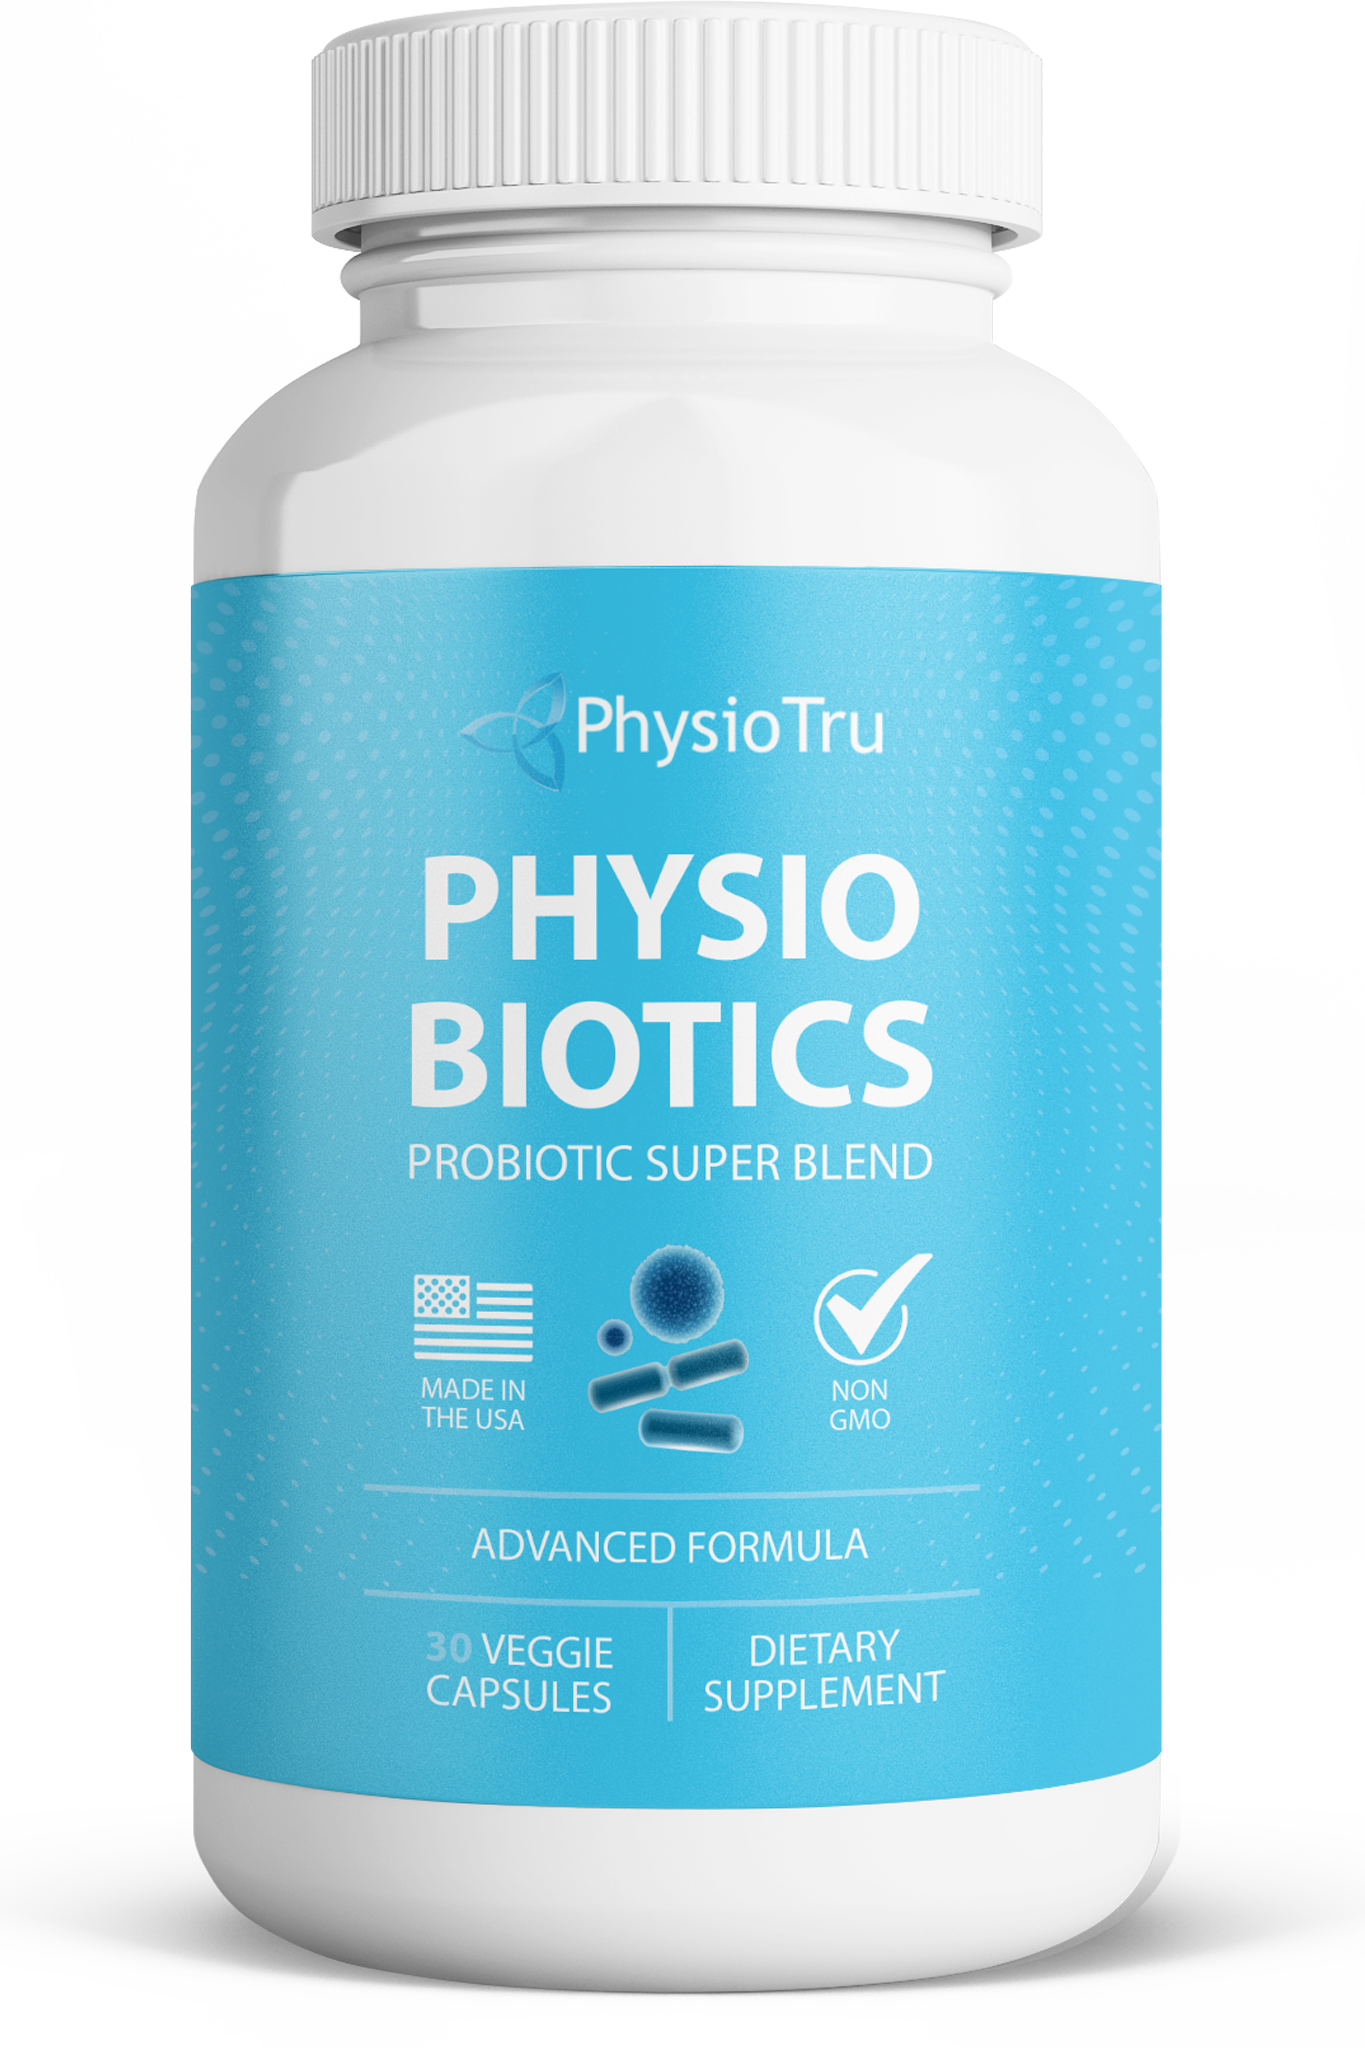 Physio Biotics